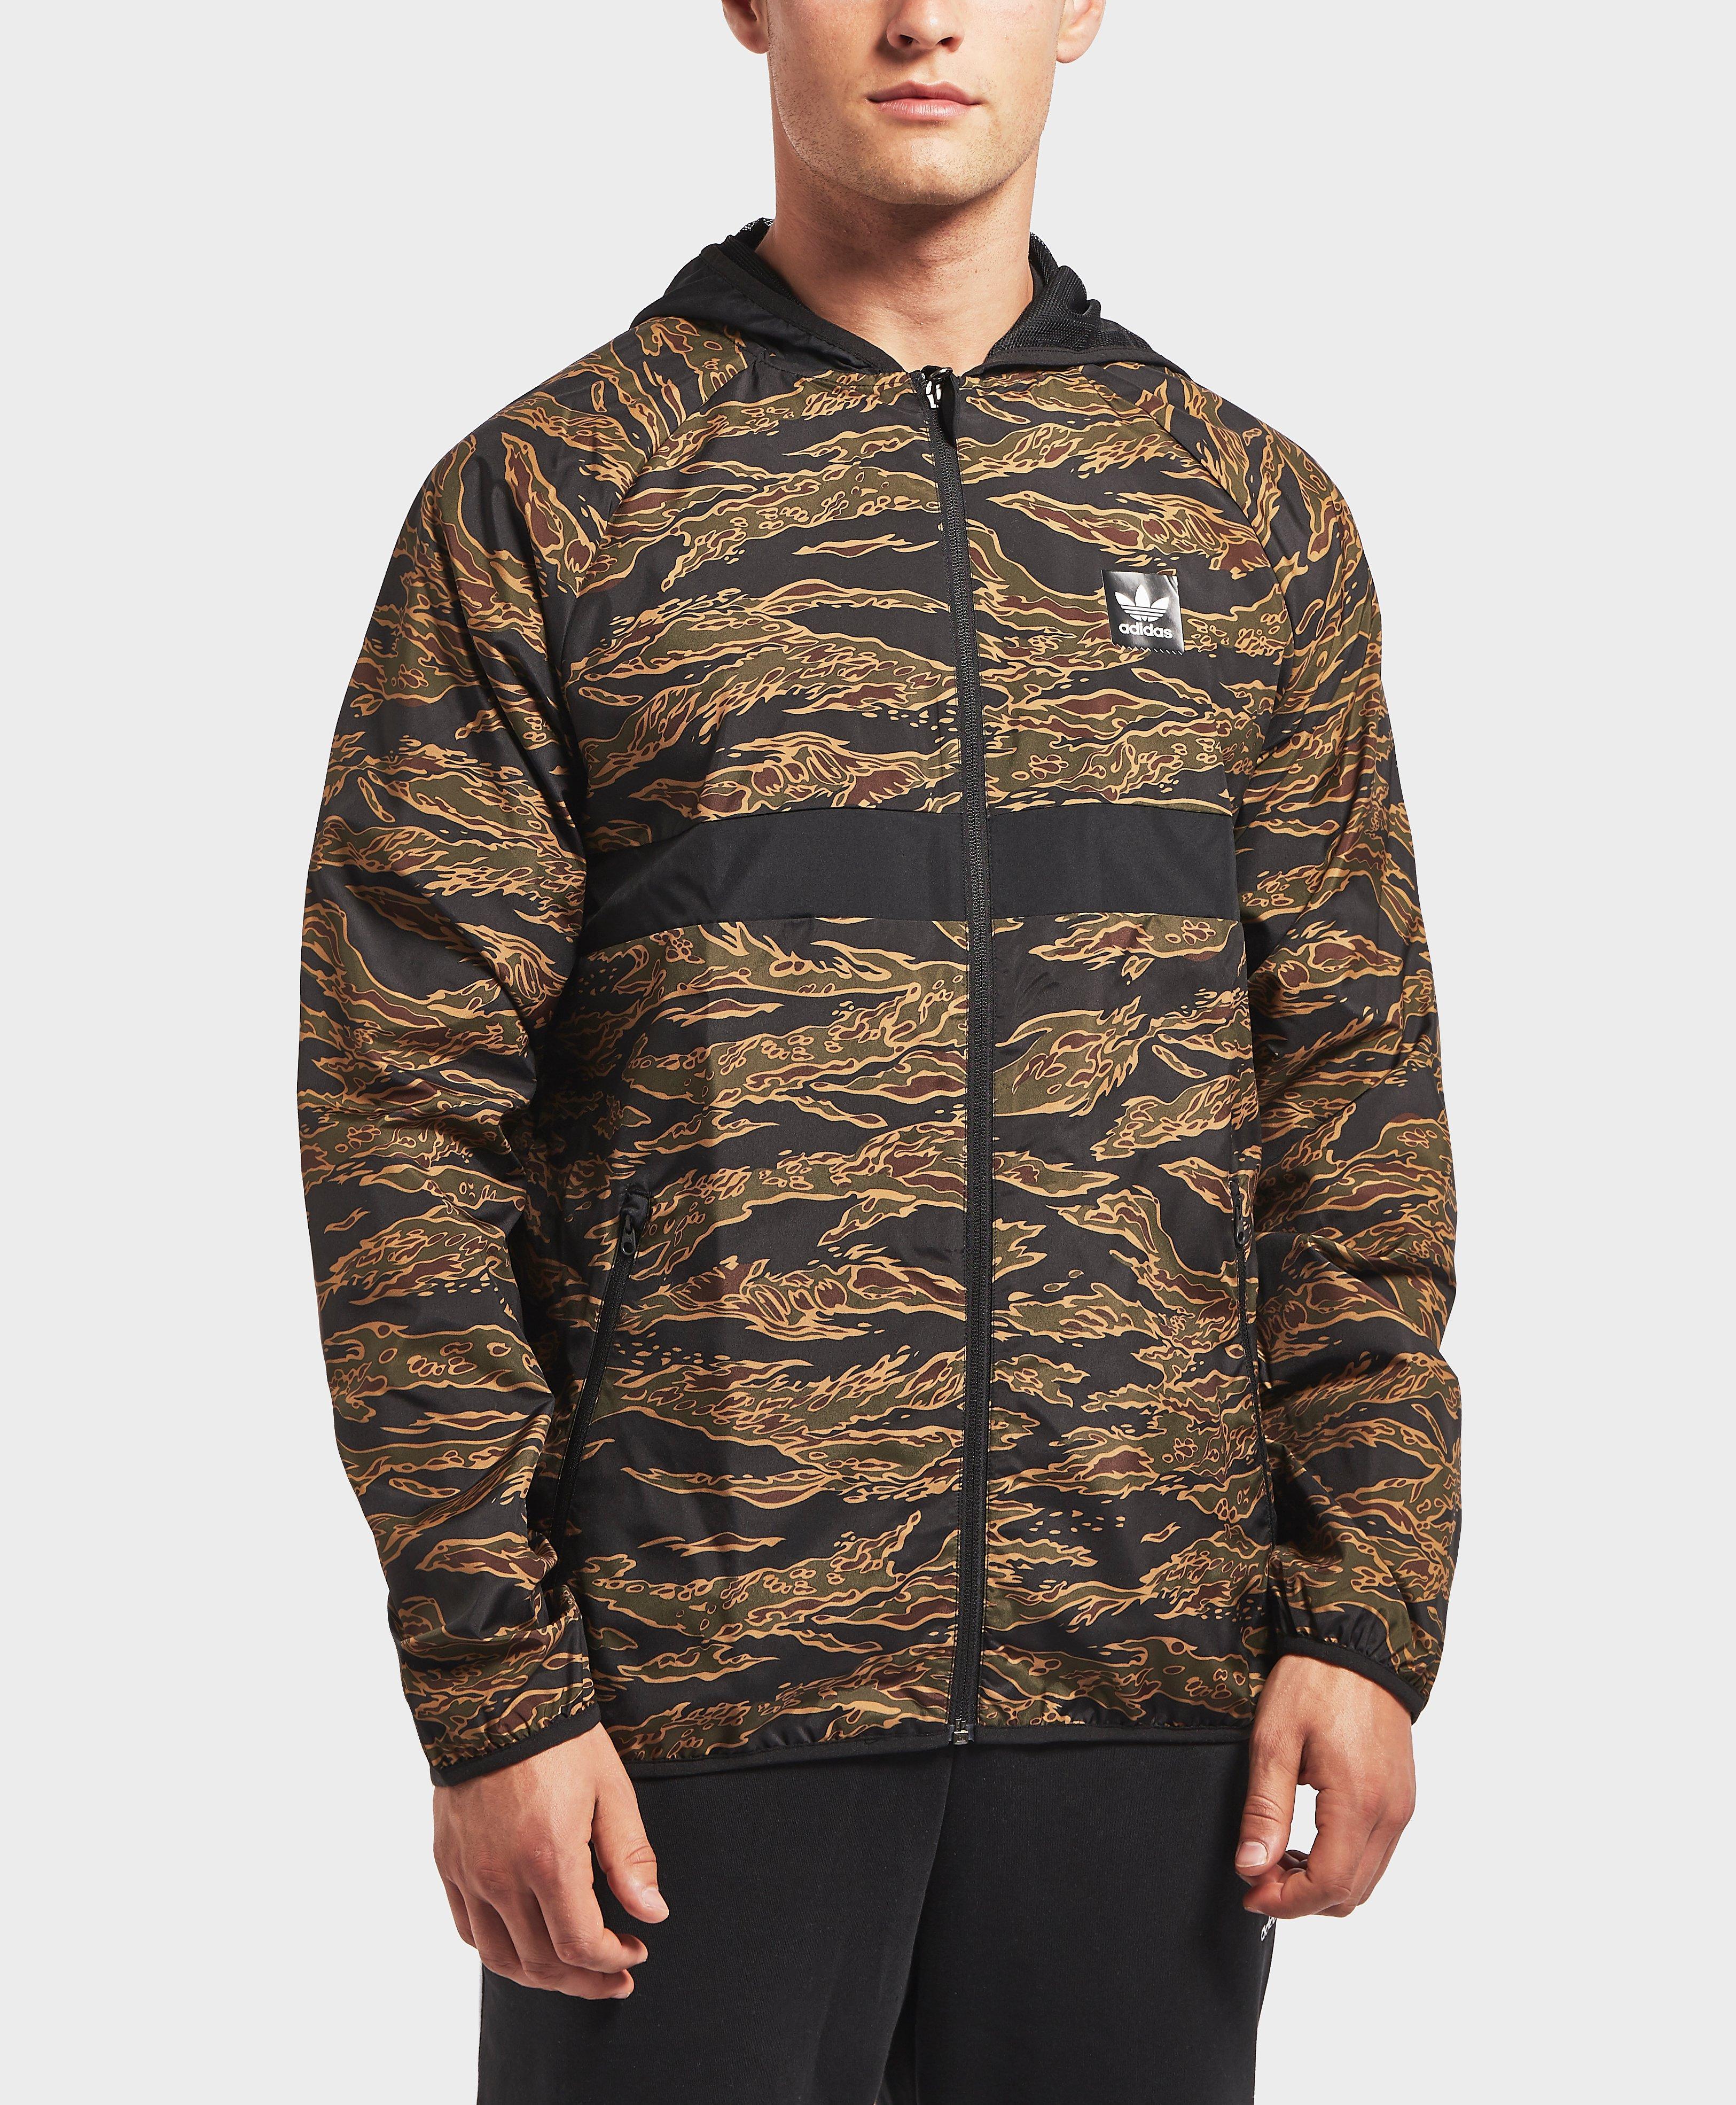 adidas Originals Synthetic Tiger Camouflage Windbreaker Jacket for Men -  Lyst